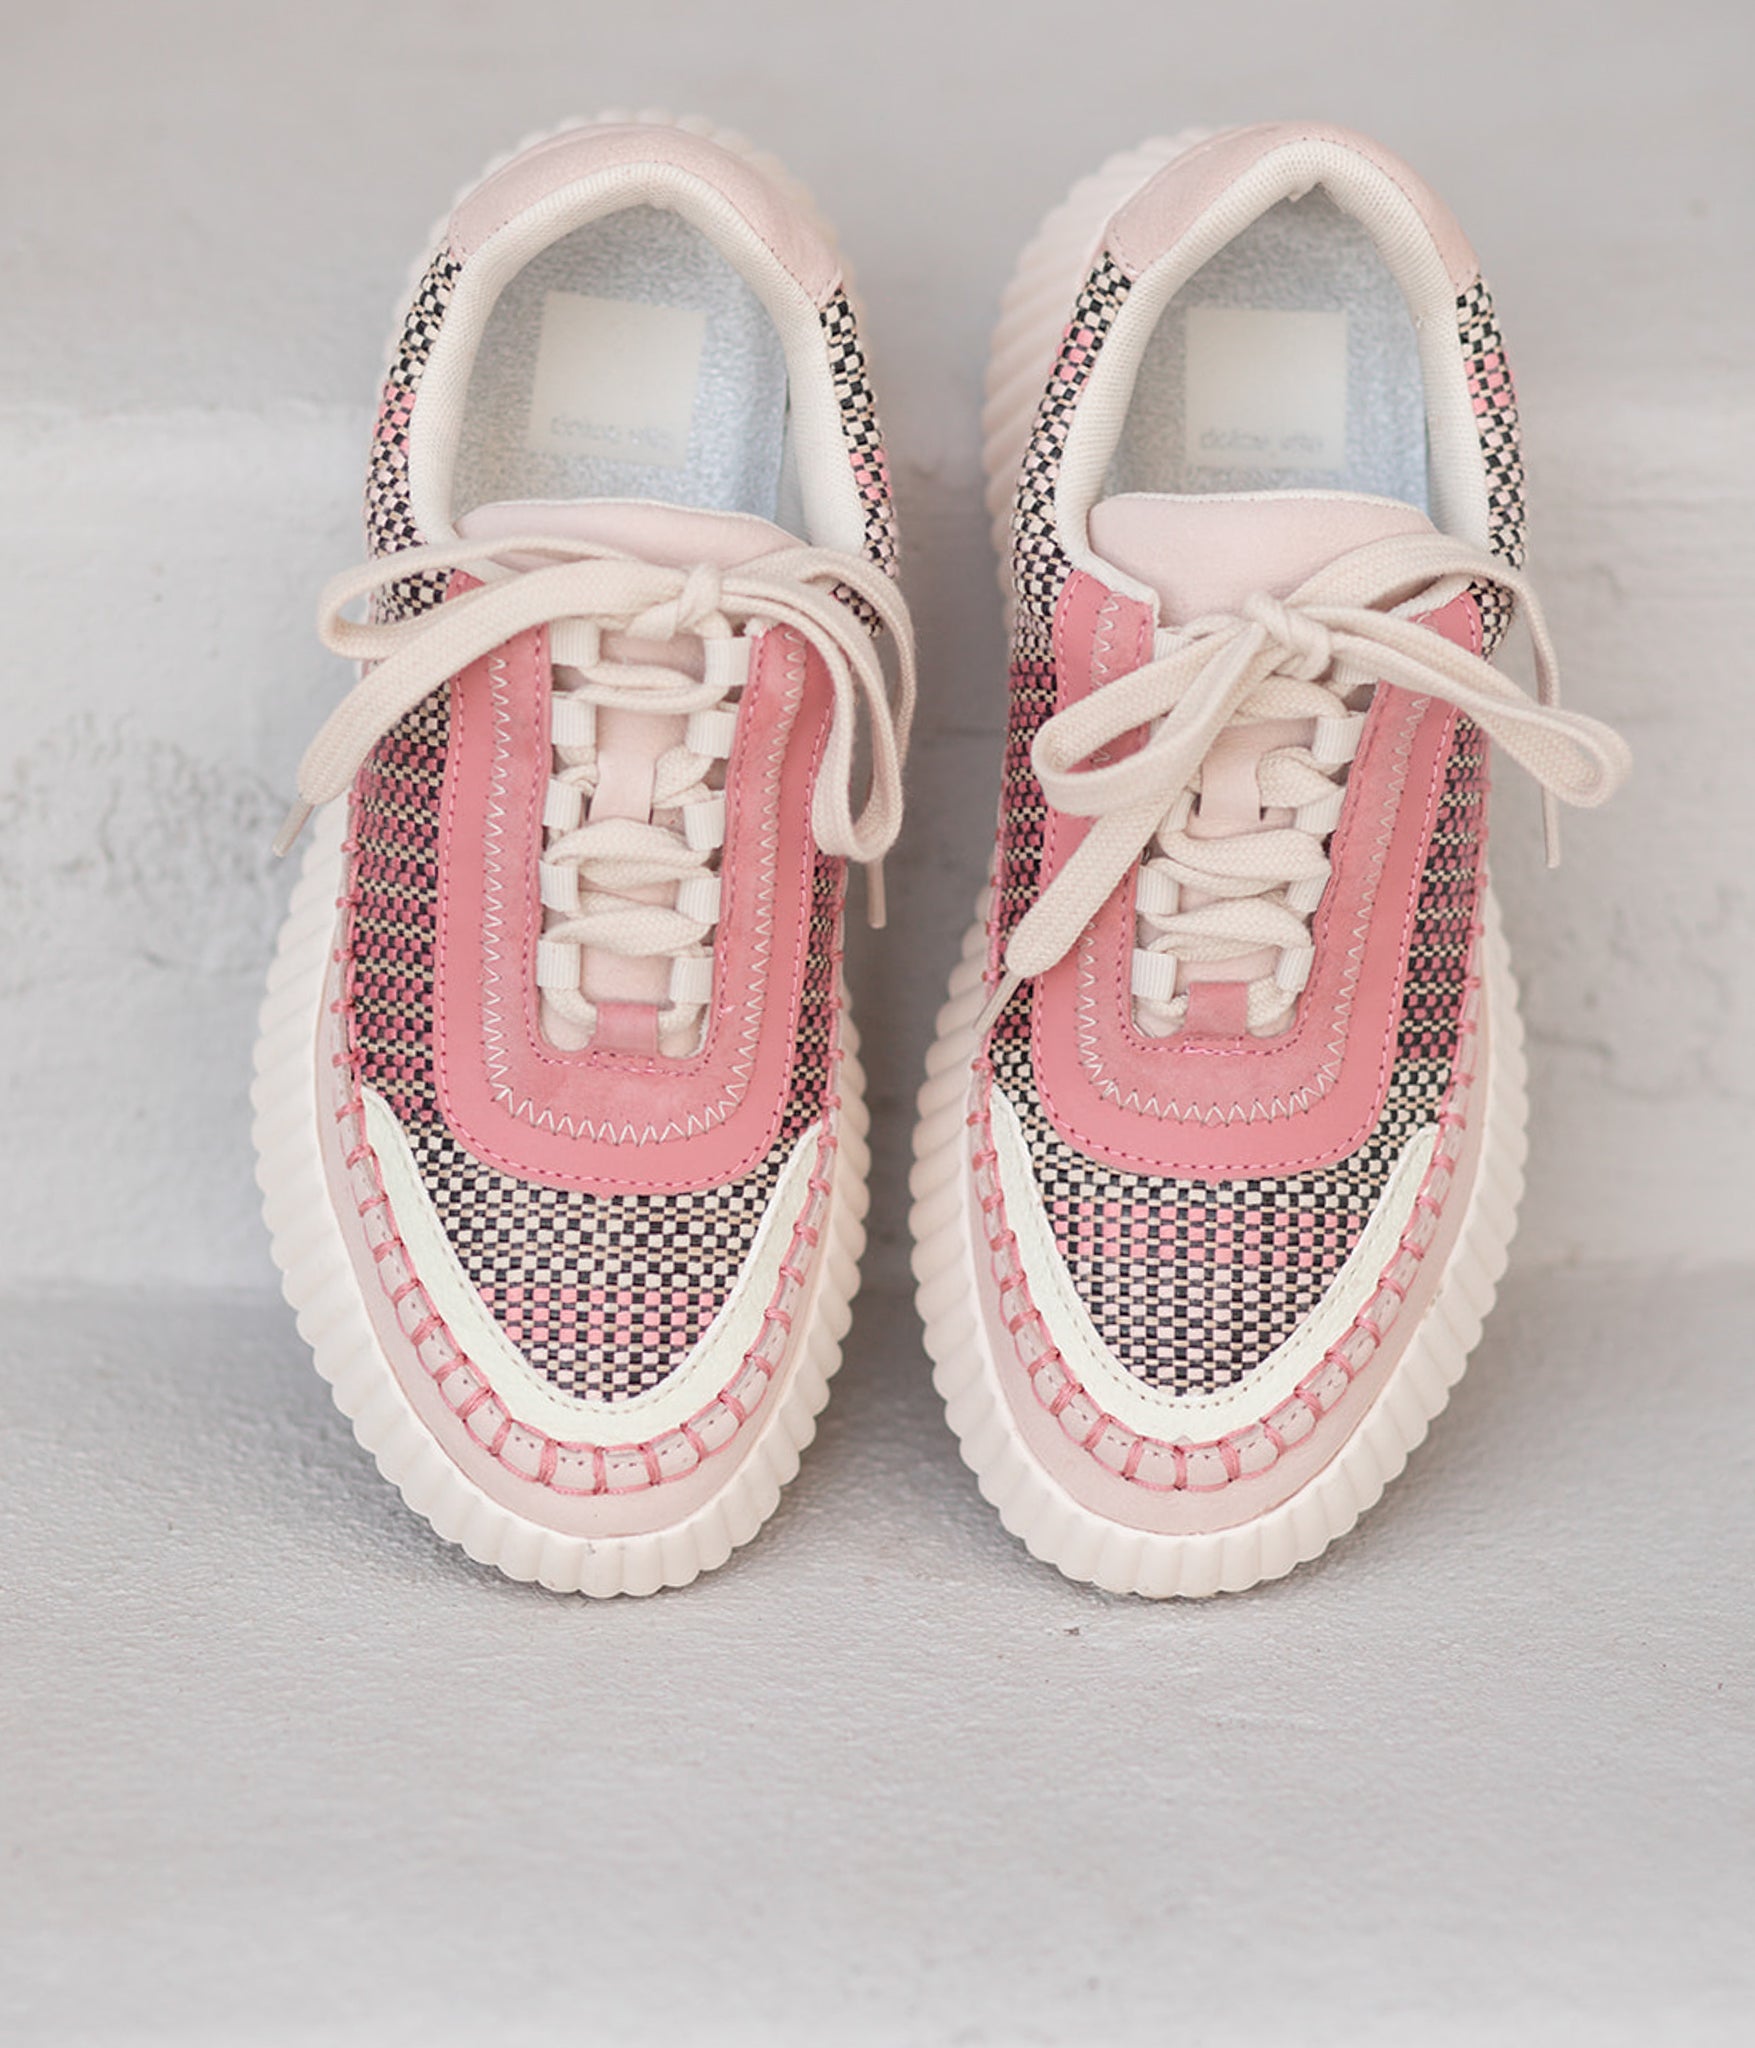 Dolen Woven Platform Sneakers in Pink Multi by Dolce Vita